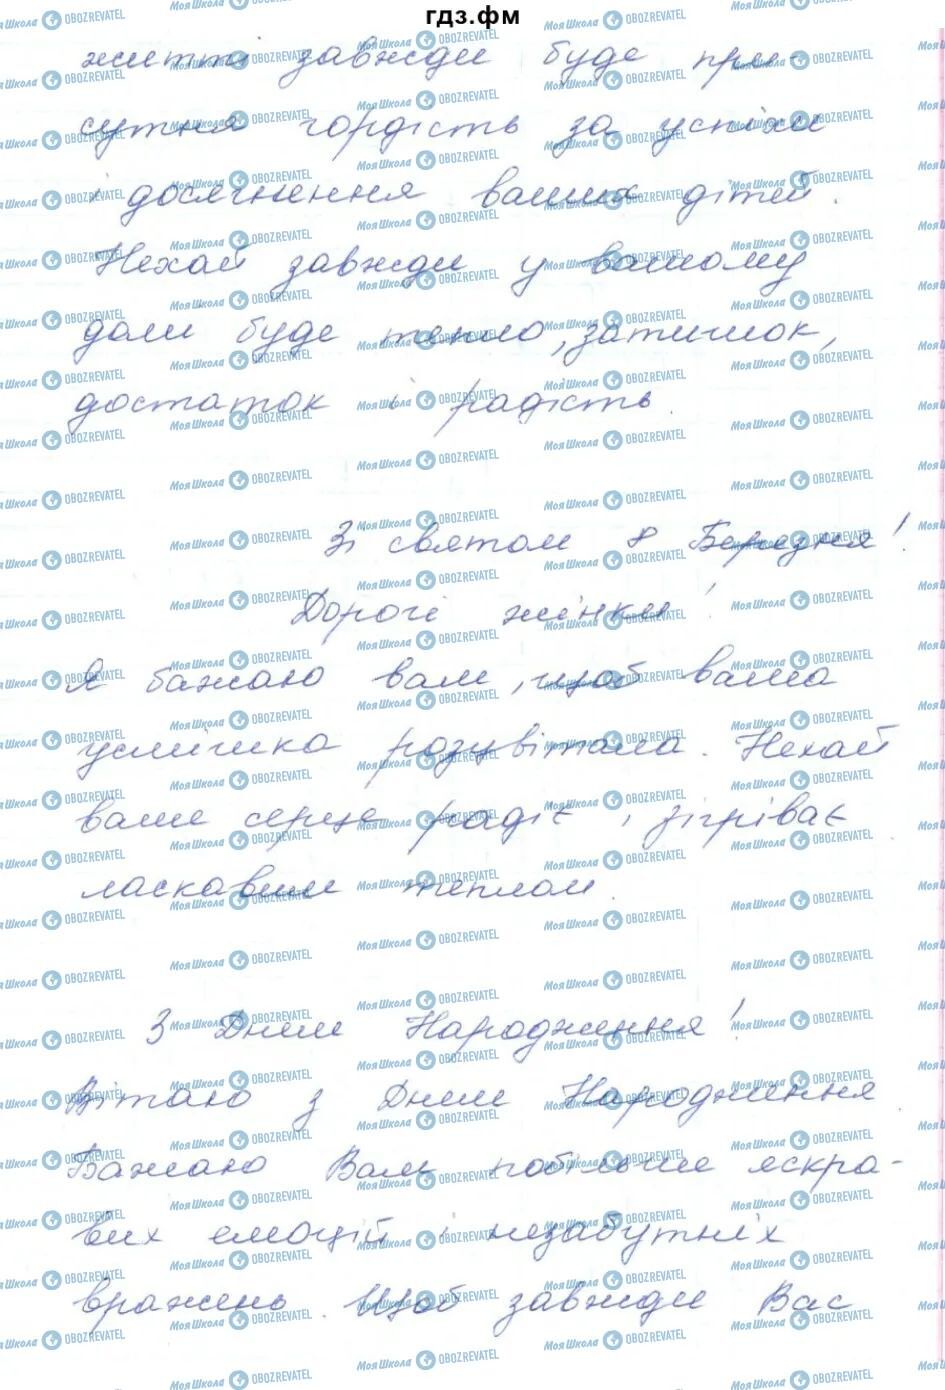 ГДЗ Укр мова 5 класс страница 582